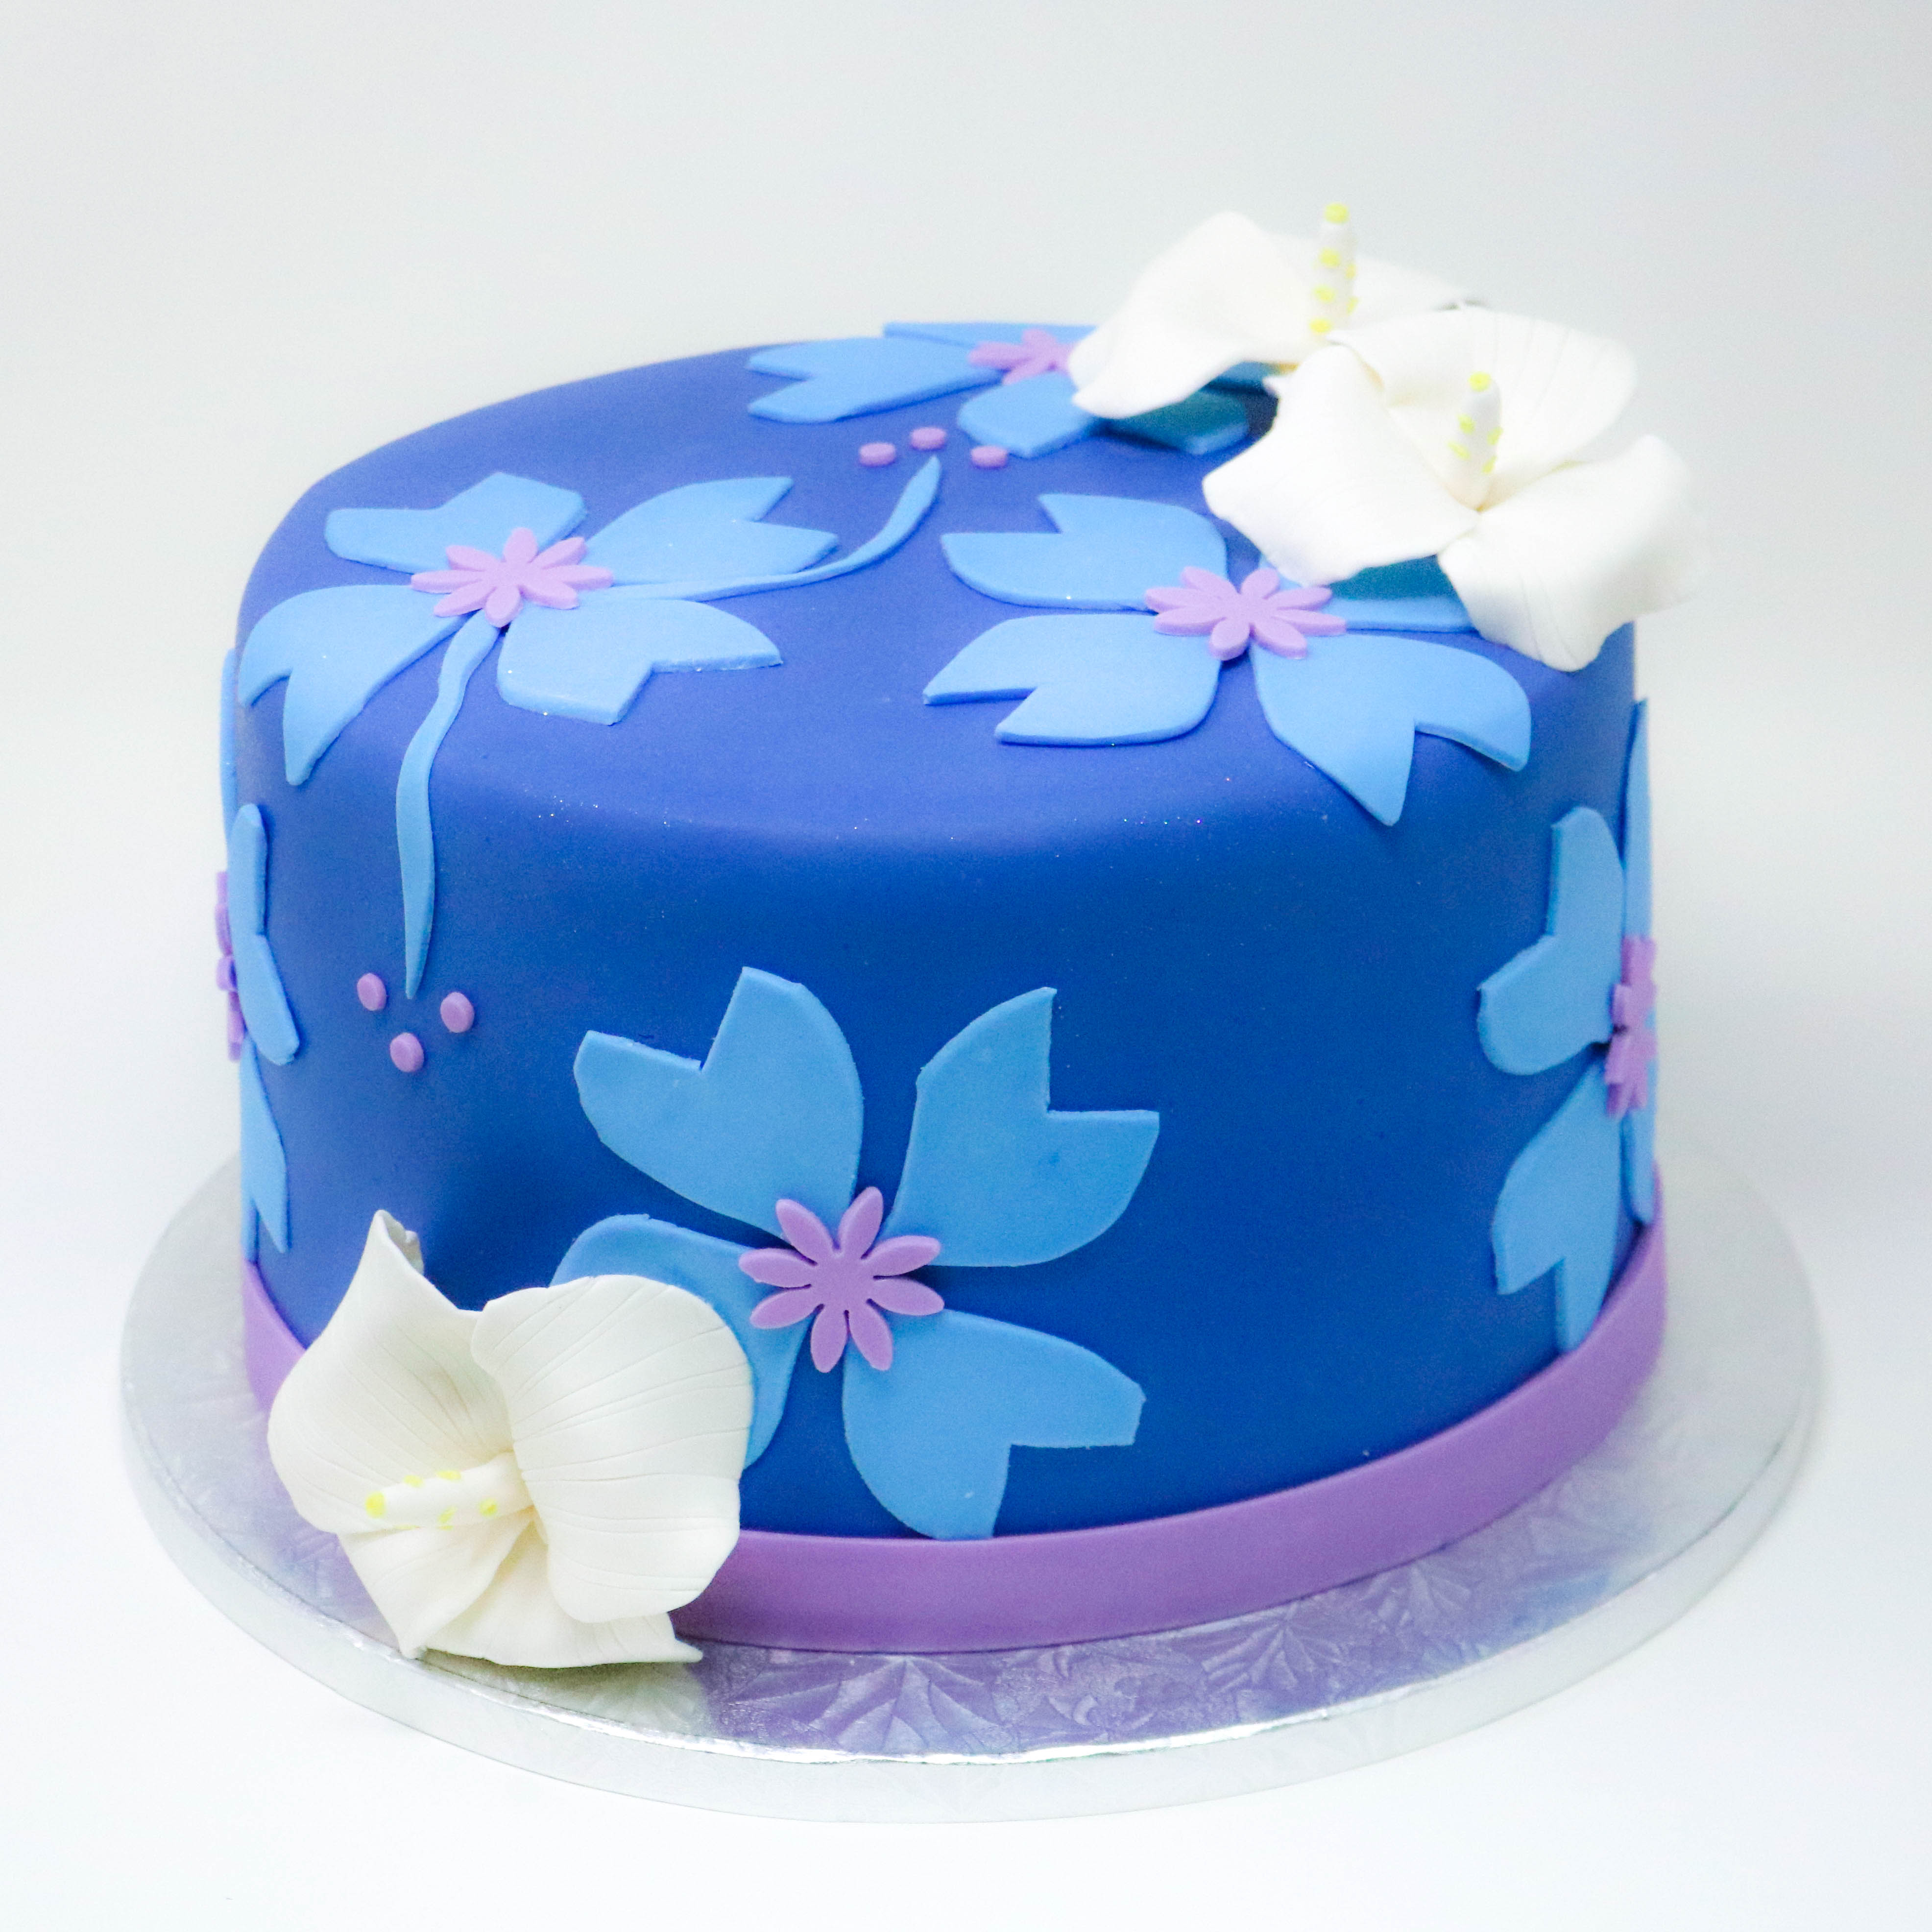 Lilo & Stitch inspired cake – Da Cakes Houston